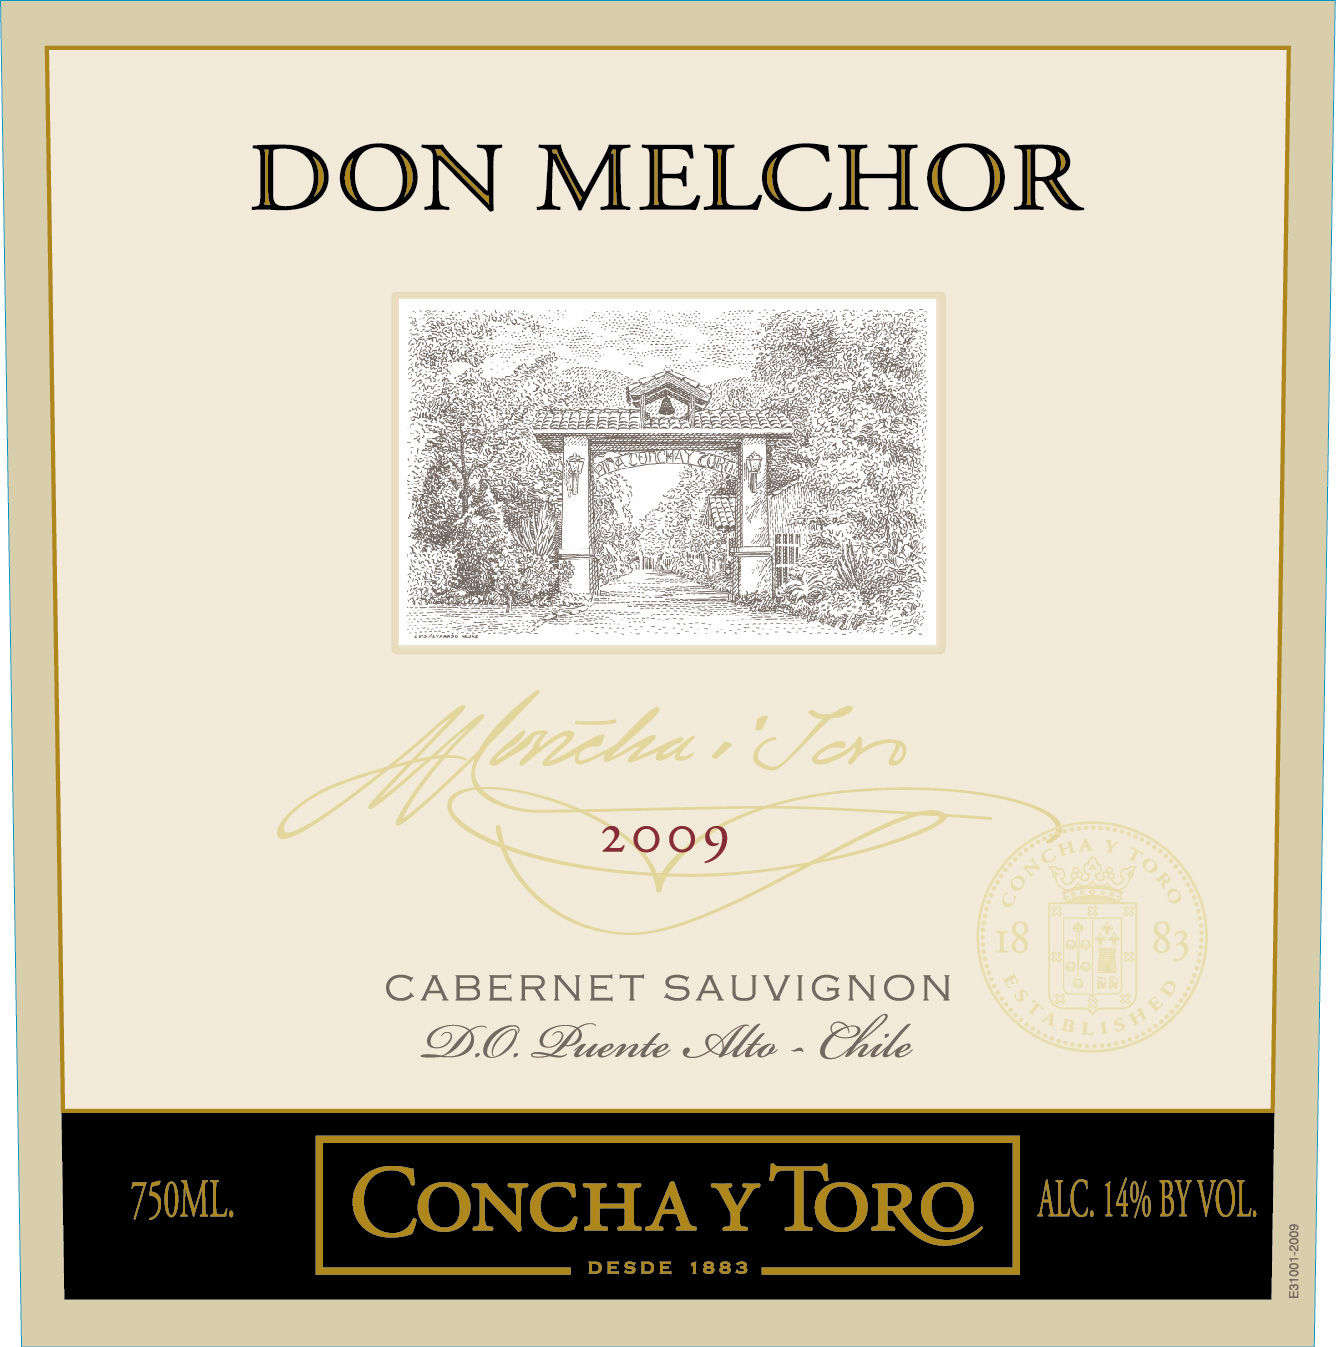 2018 Concha Y Toro Don Melchor Cabernet Sauvignon Puente Alto Chile - click image for full description